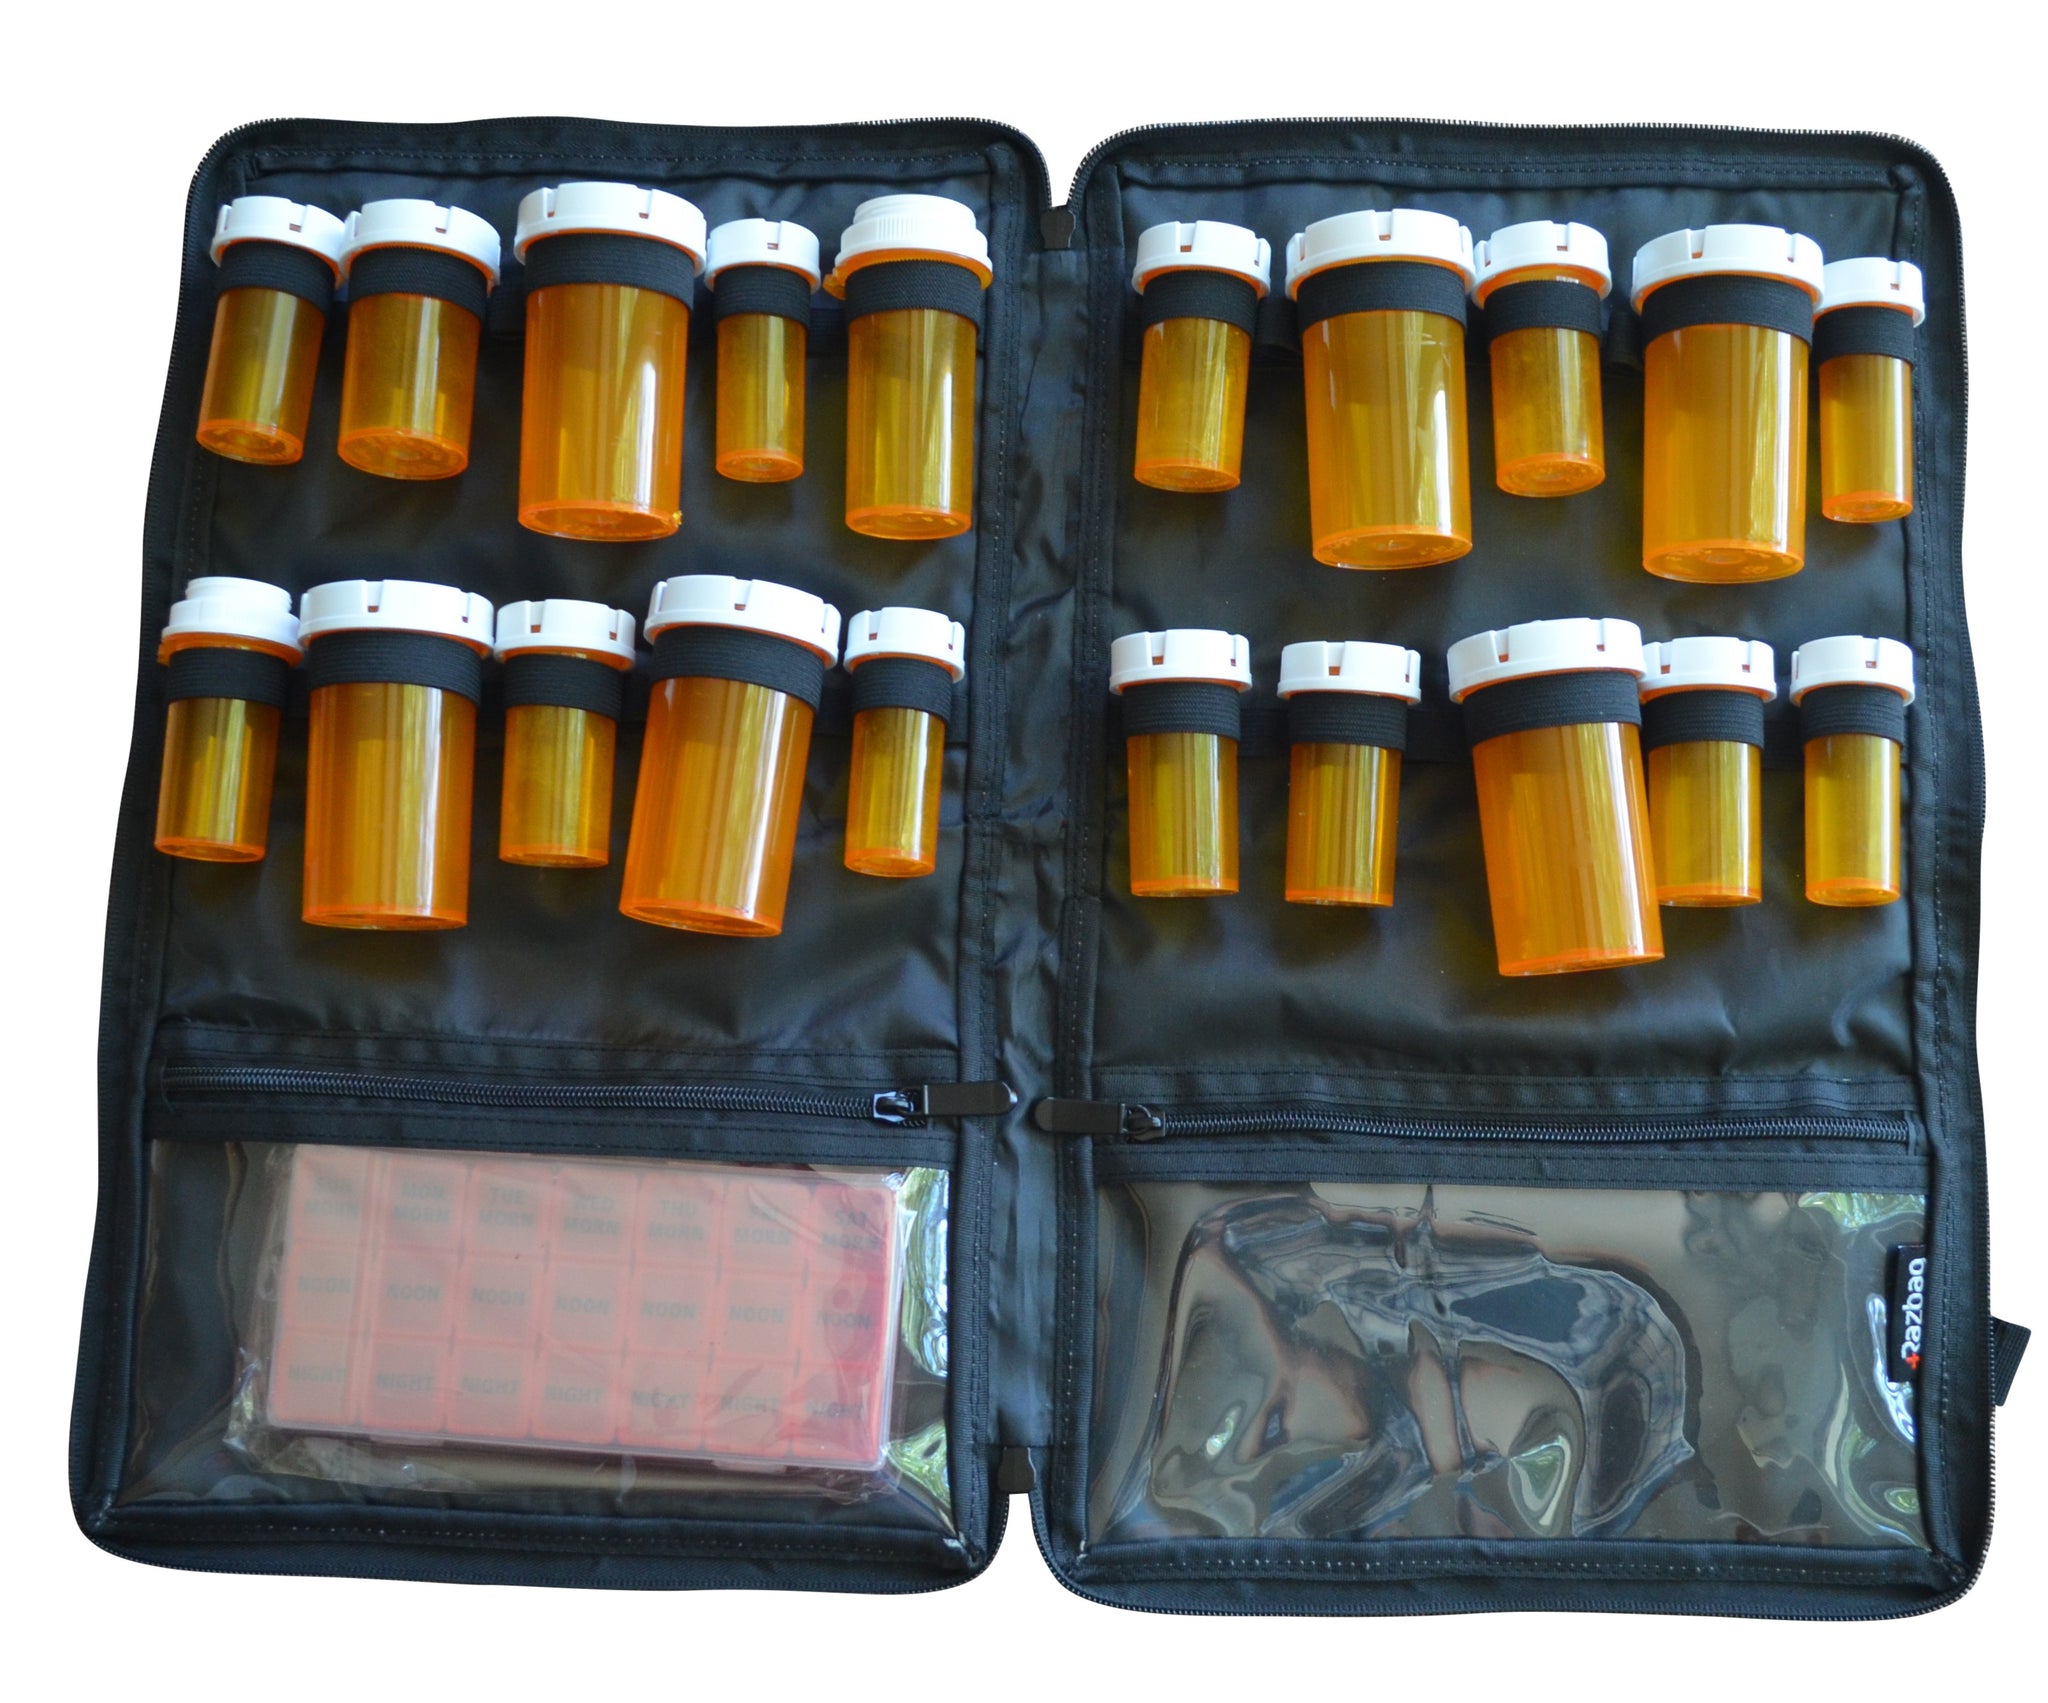 Razbag Elite Large Prescription Medication Bag with exclusive Butterfl –  Razbag LLC